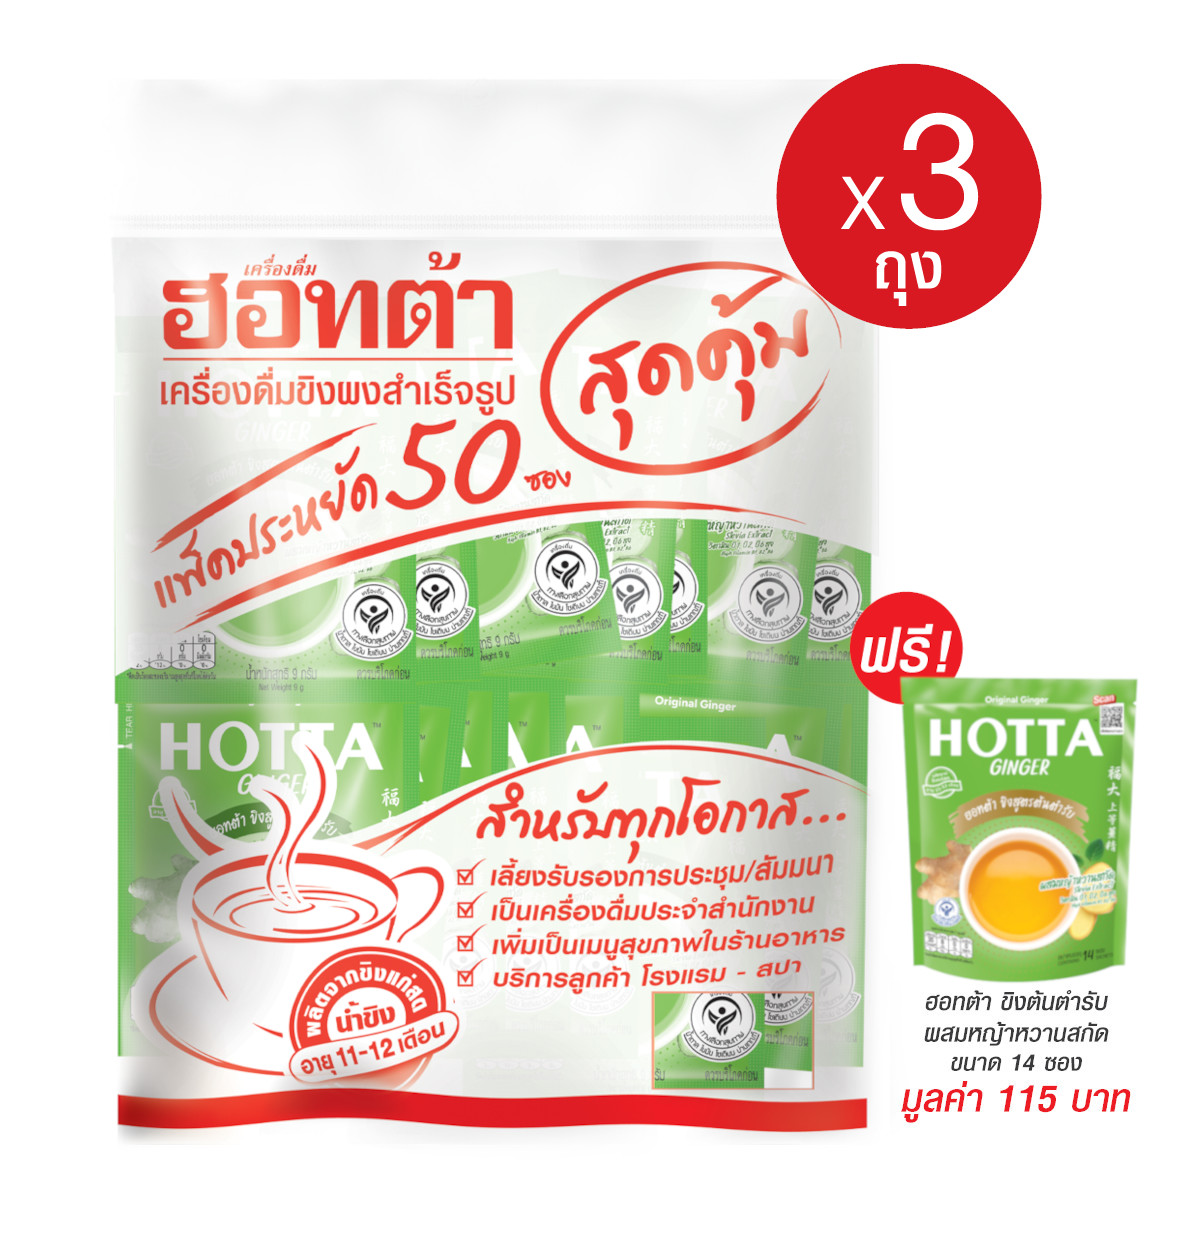 HOTTA Instant Ginger with Stevia Extract Original Formula 9g., 50 sachets, 3 Packs Free 14 Sachets